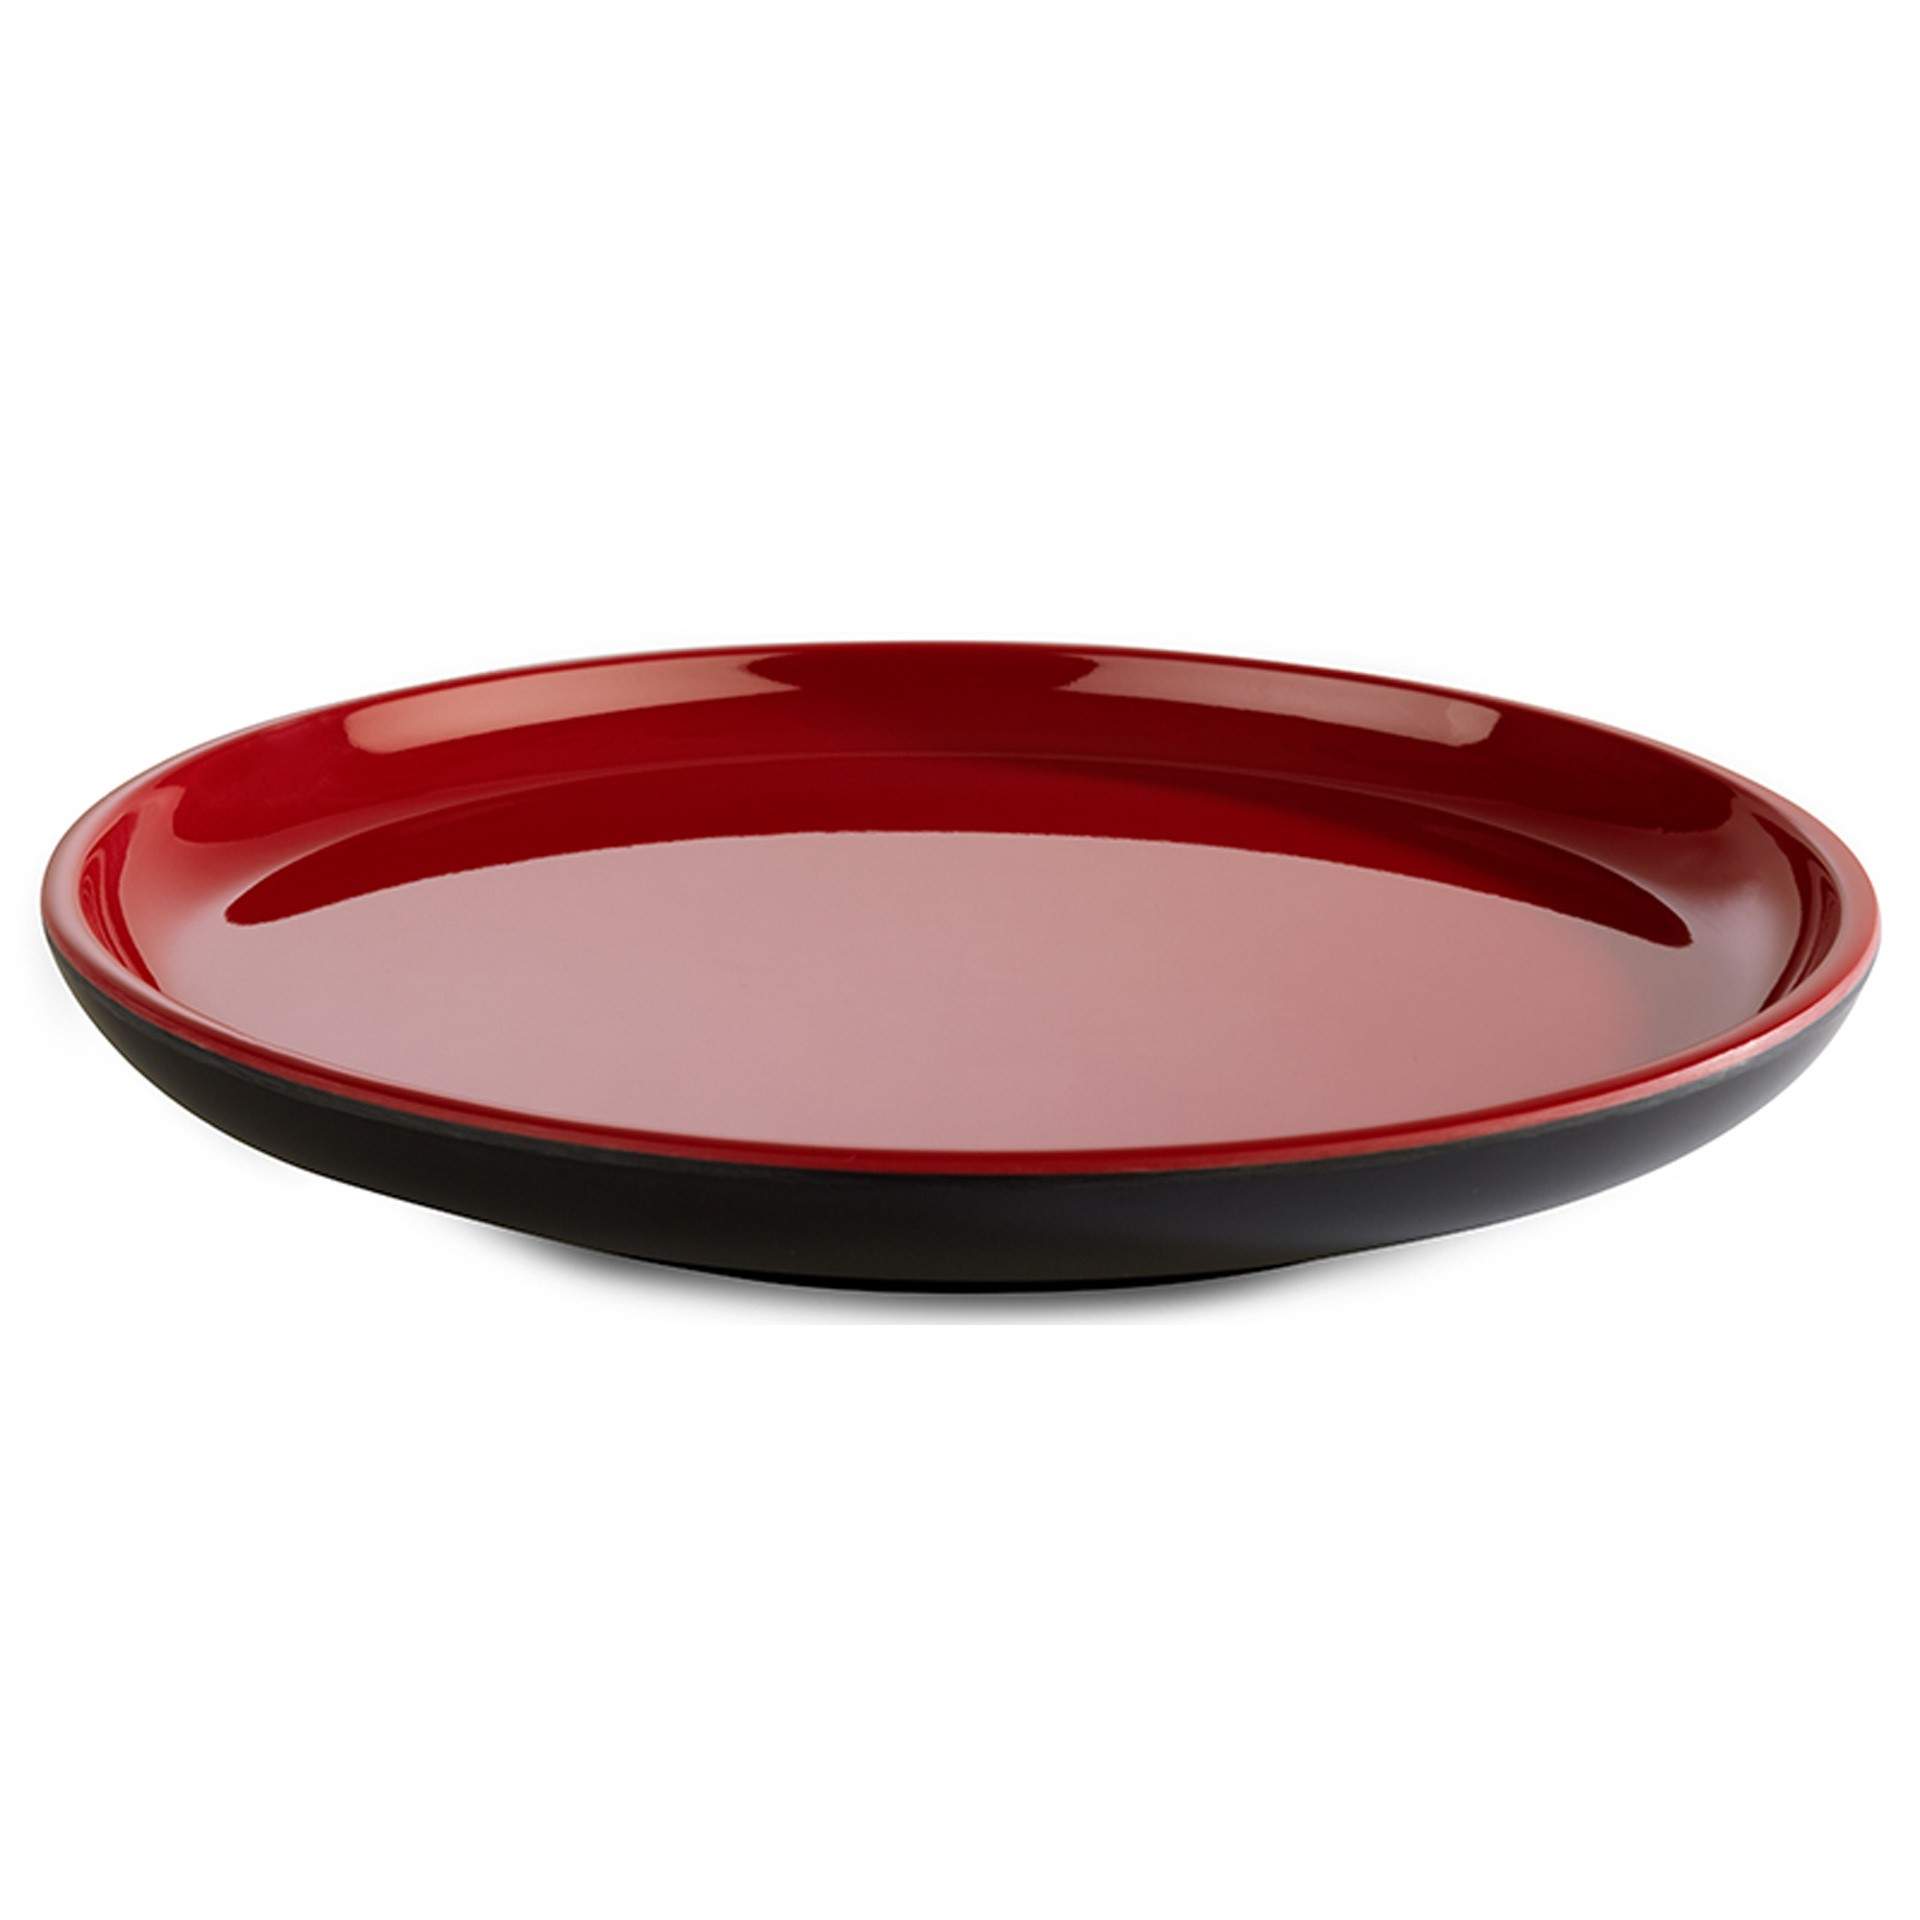 Teller (flach) - beidseitig farbig - Serie Asia Plus - rot / schwarz - Abm. 2,0 cm - Ø 16 cm - Melamin - 15435-B